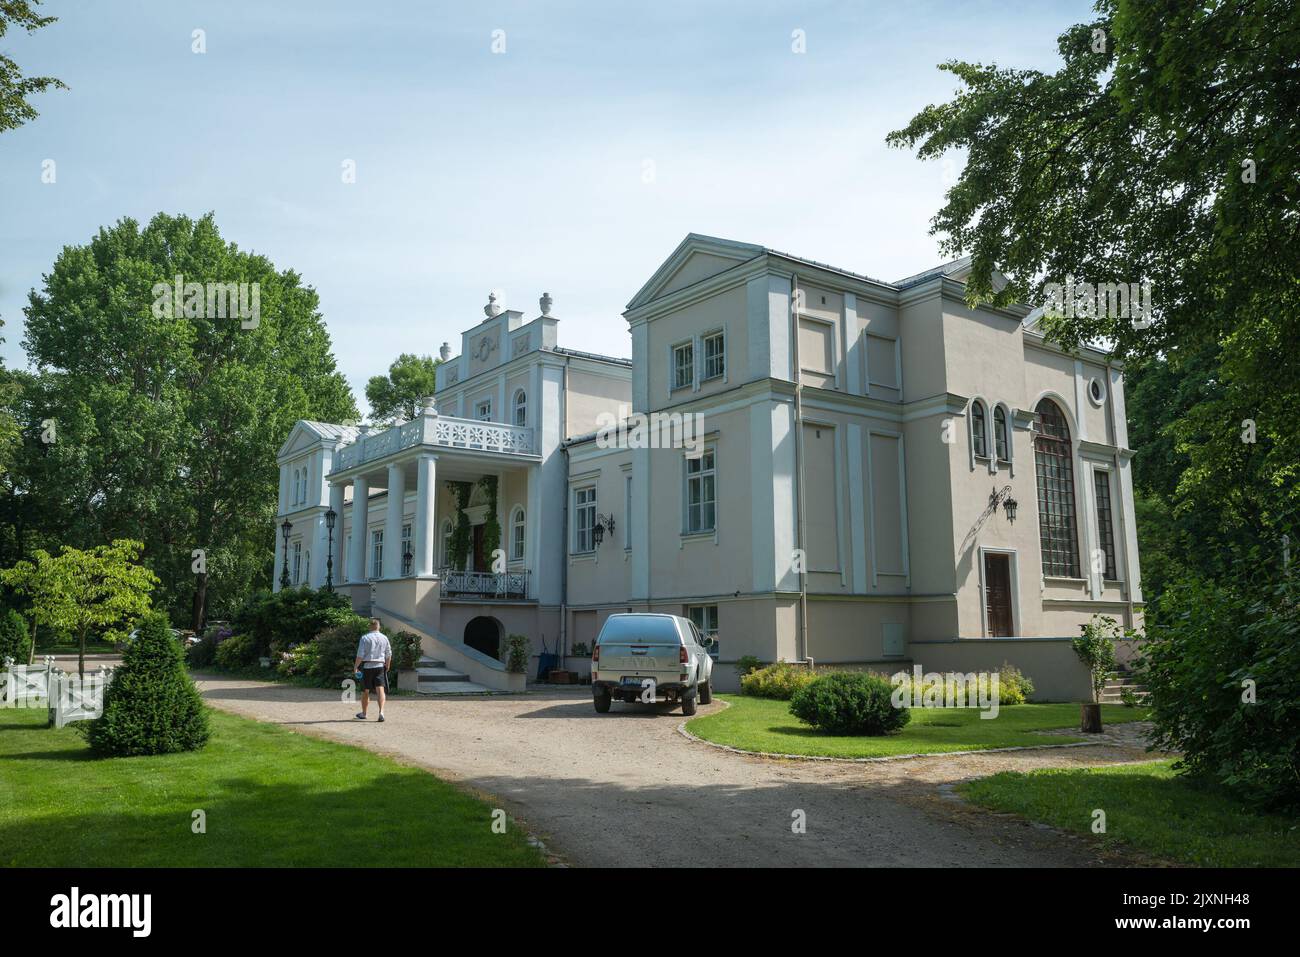 Manor house in Zaborówek, Gmina Belsk Duży, within Grójec County, Masovian Voivodeship, in east-central Poland Stock Photo